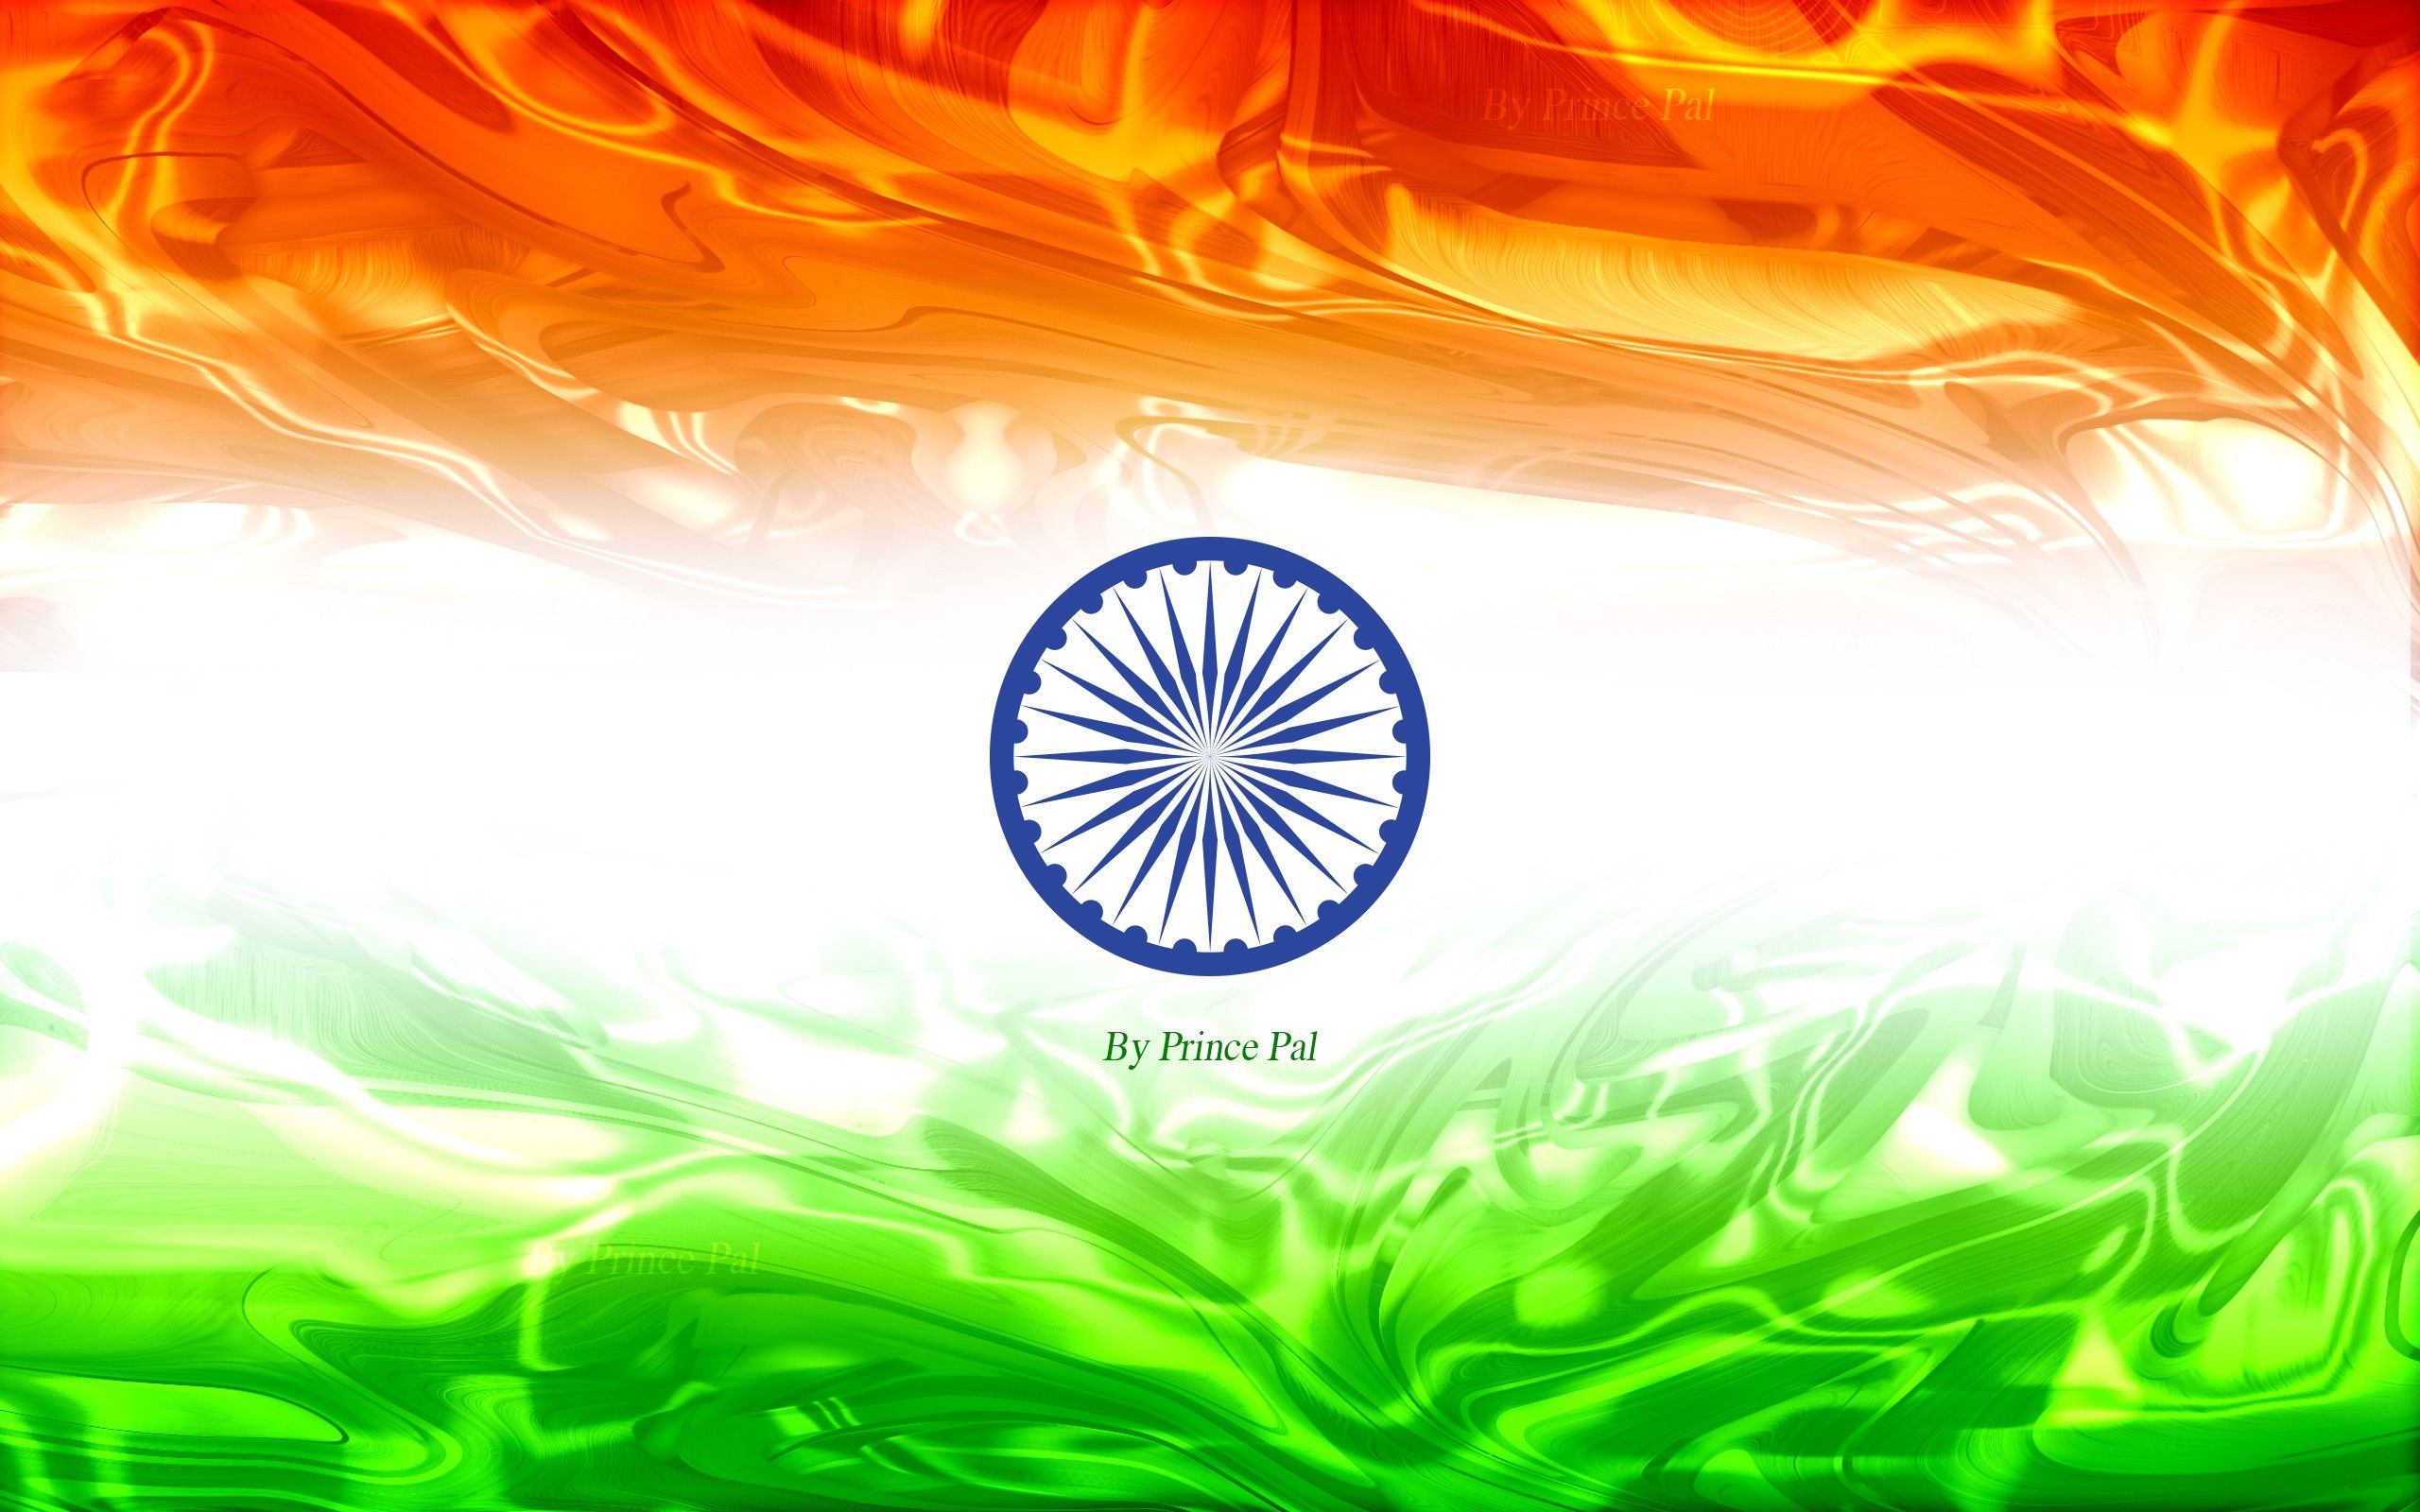 Patriotic image indian flag. Patriotic Wallpaper & Greetings: Independence Day Image for Mobile, Desktop